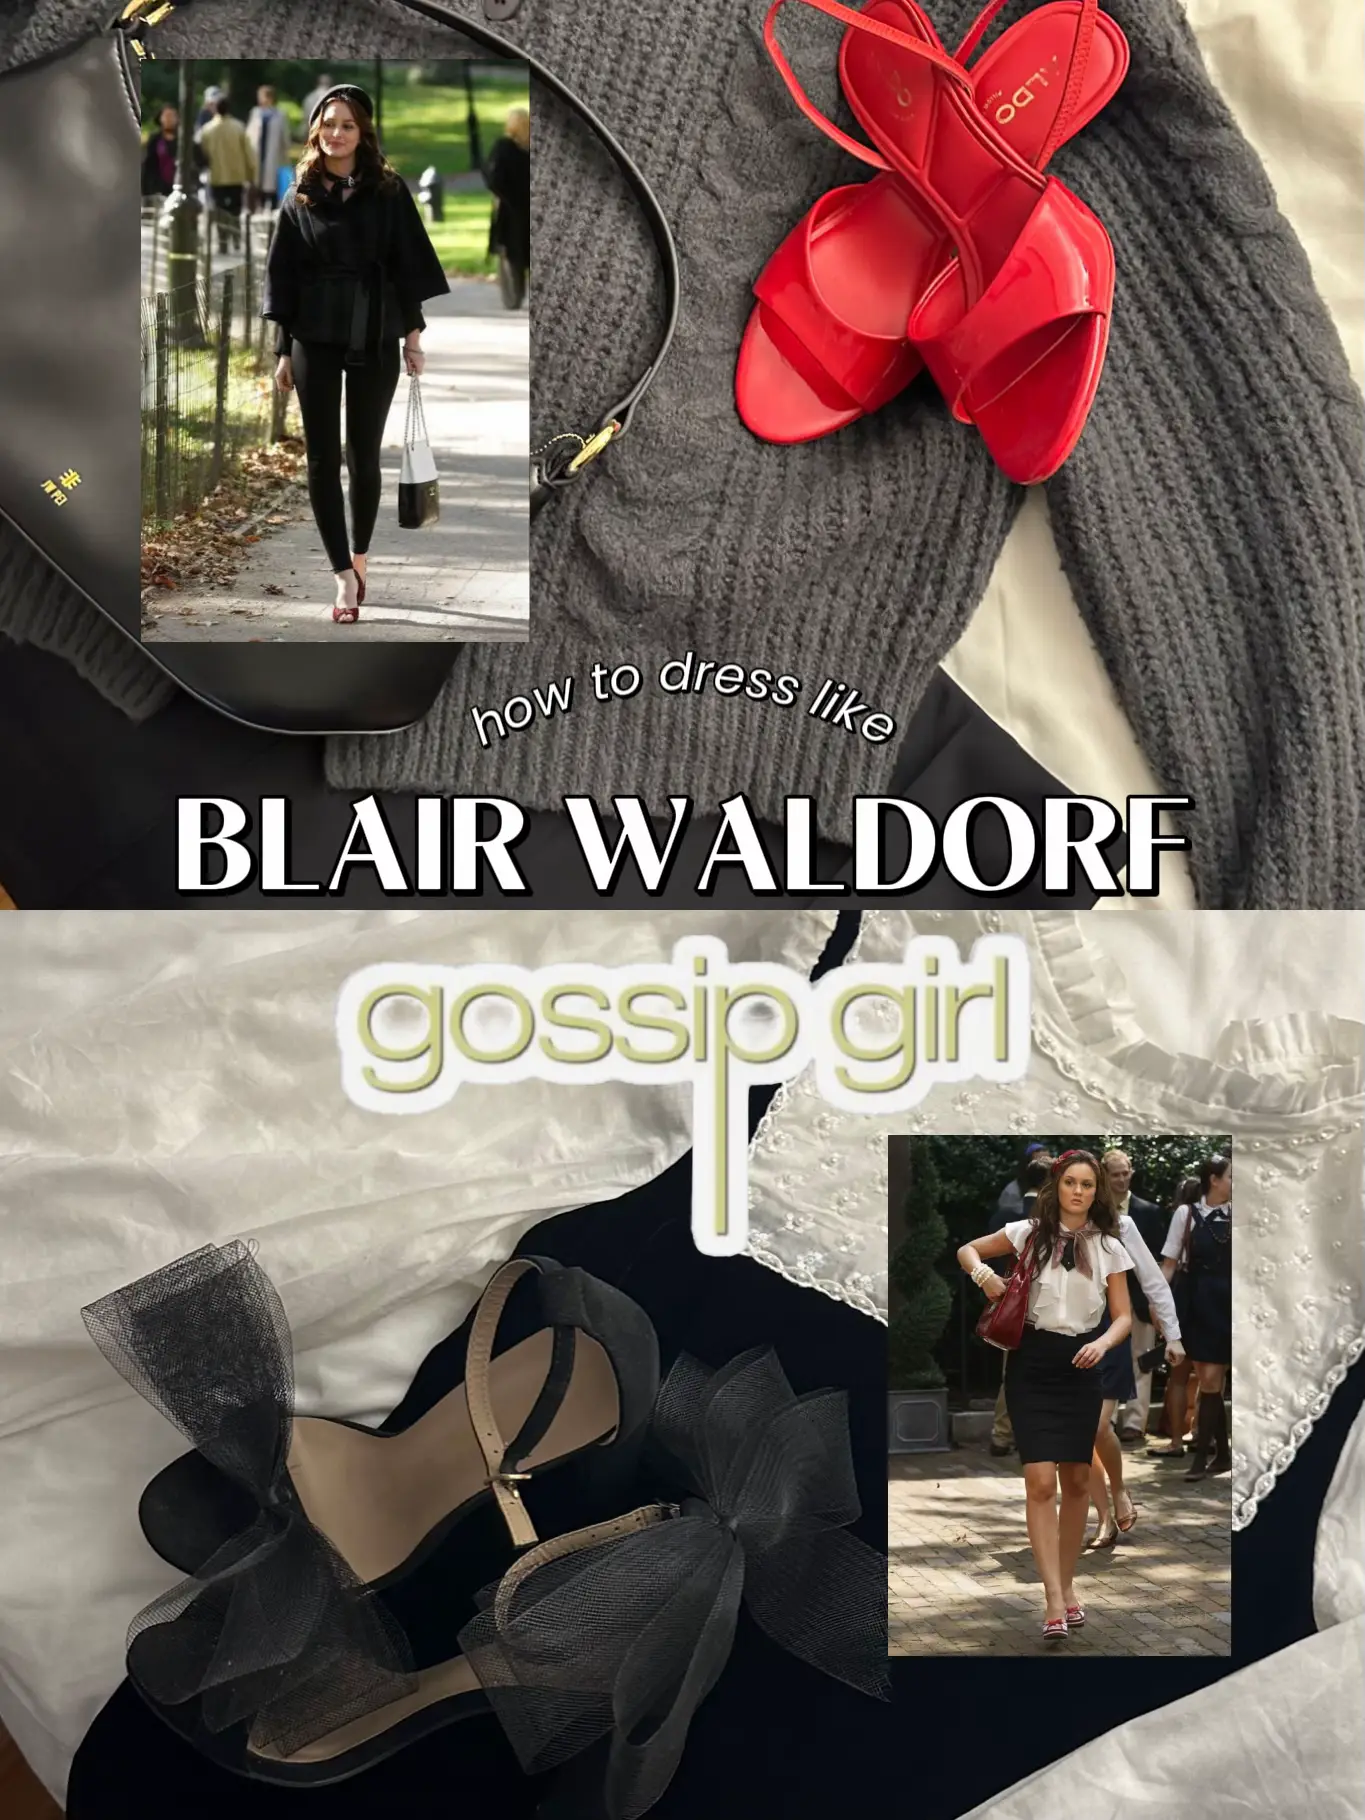 Blair Waldorf  Gossip girl outfits, Blair waldorf gossip girl, Blair  waldorf outfits